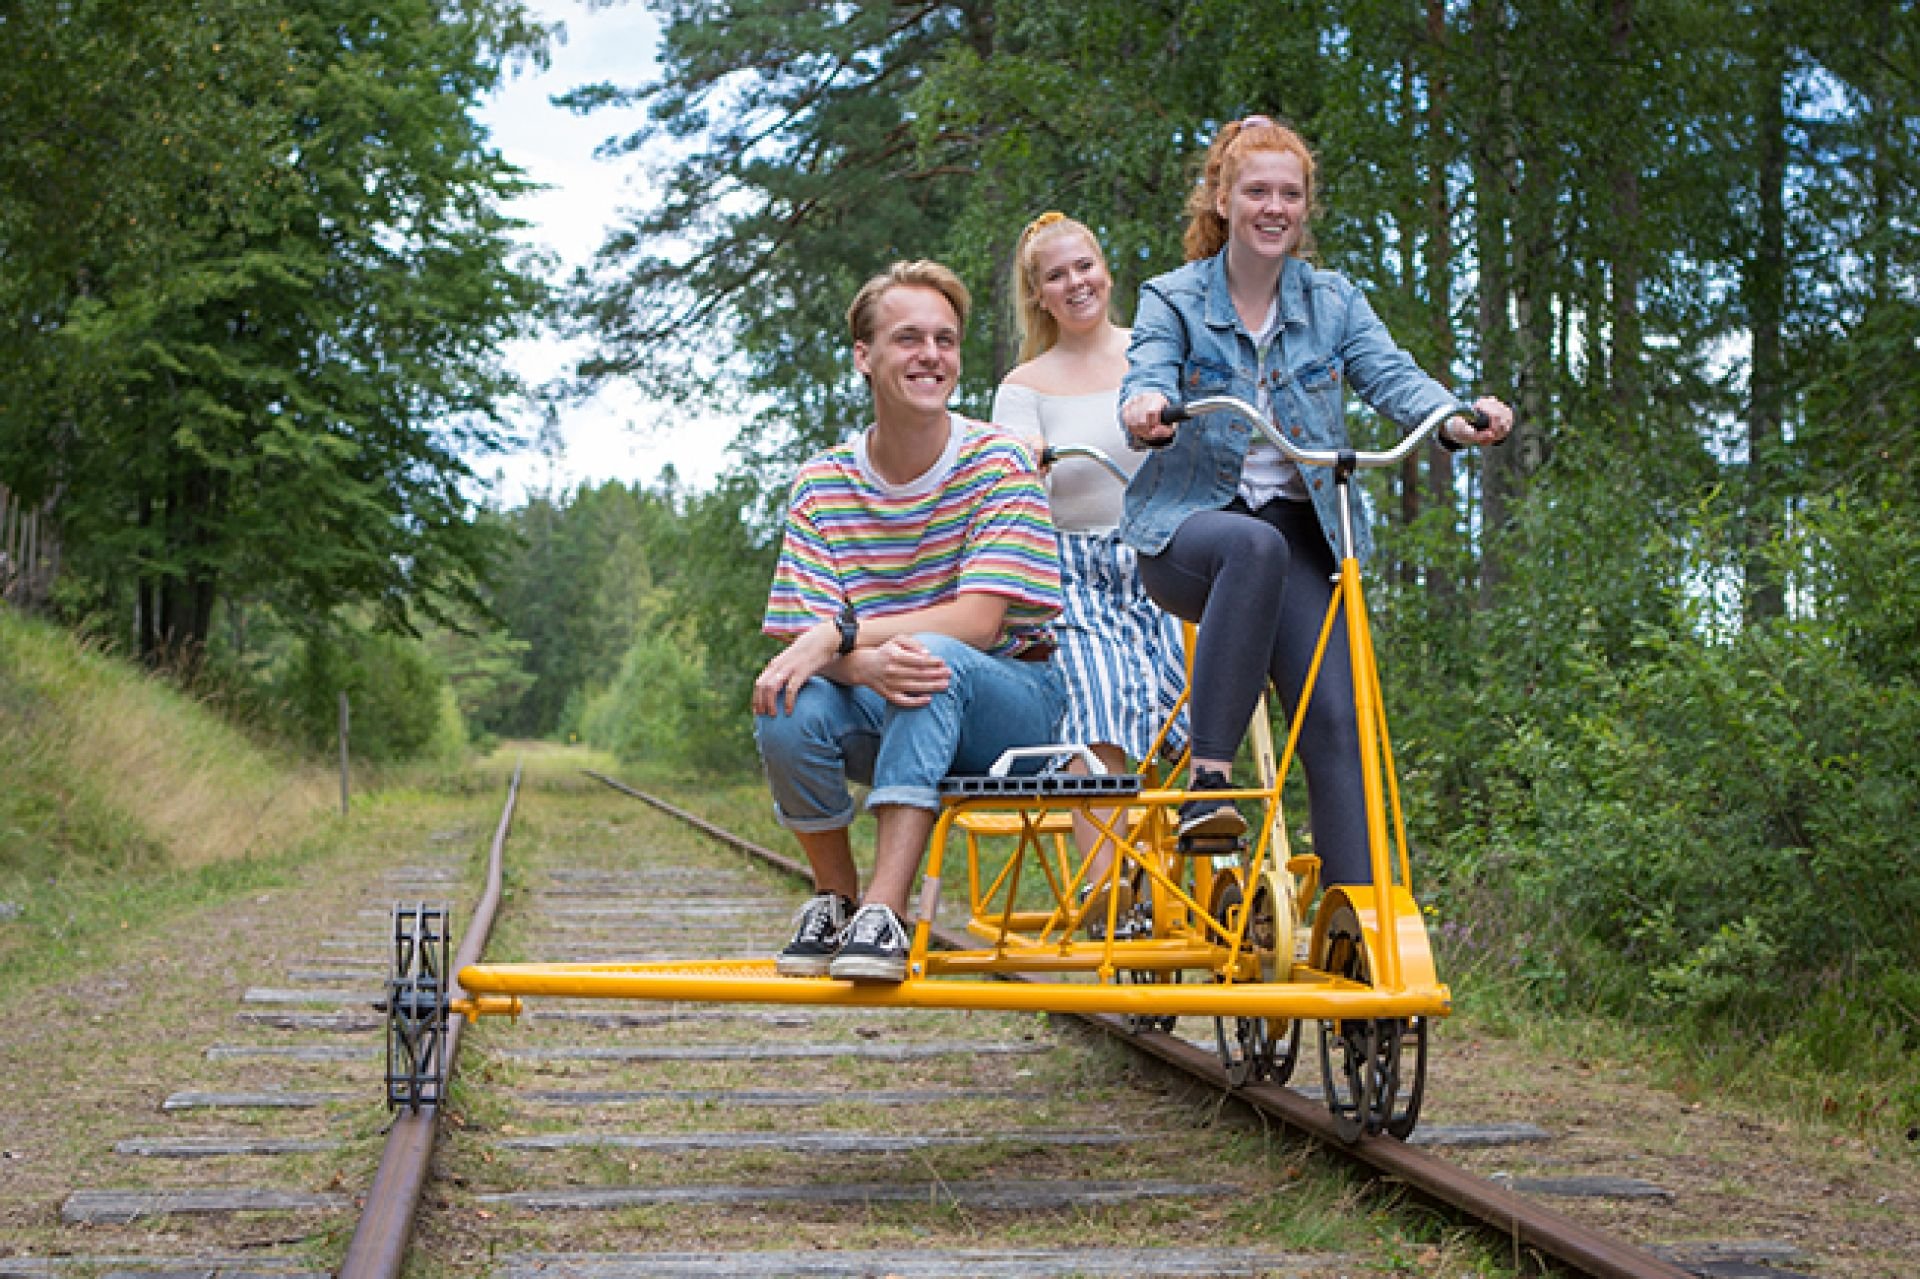 Pedal a rail-trolley